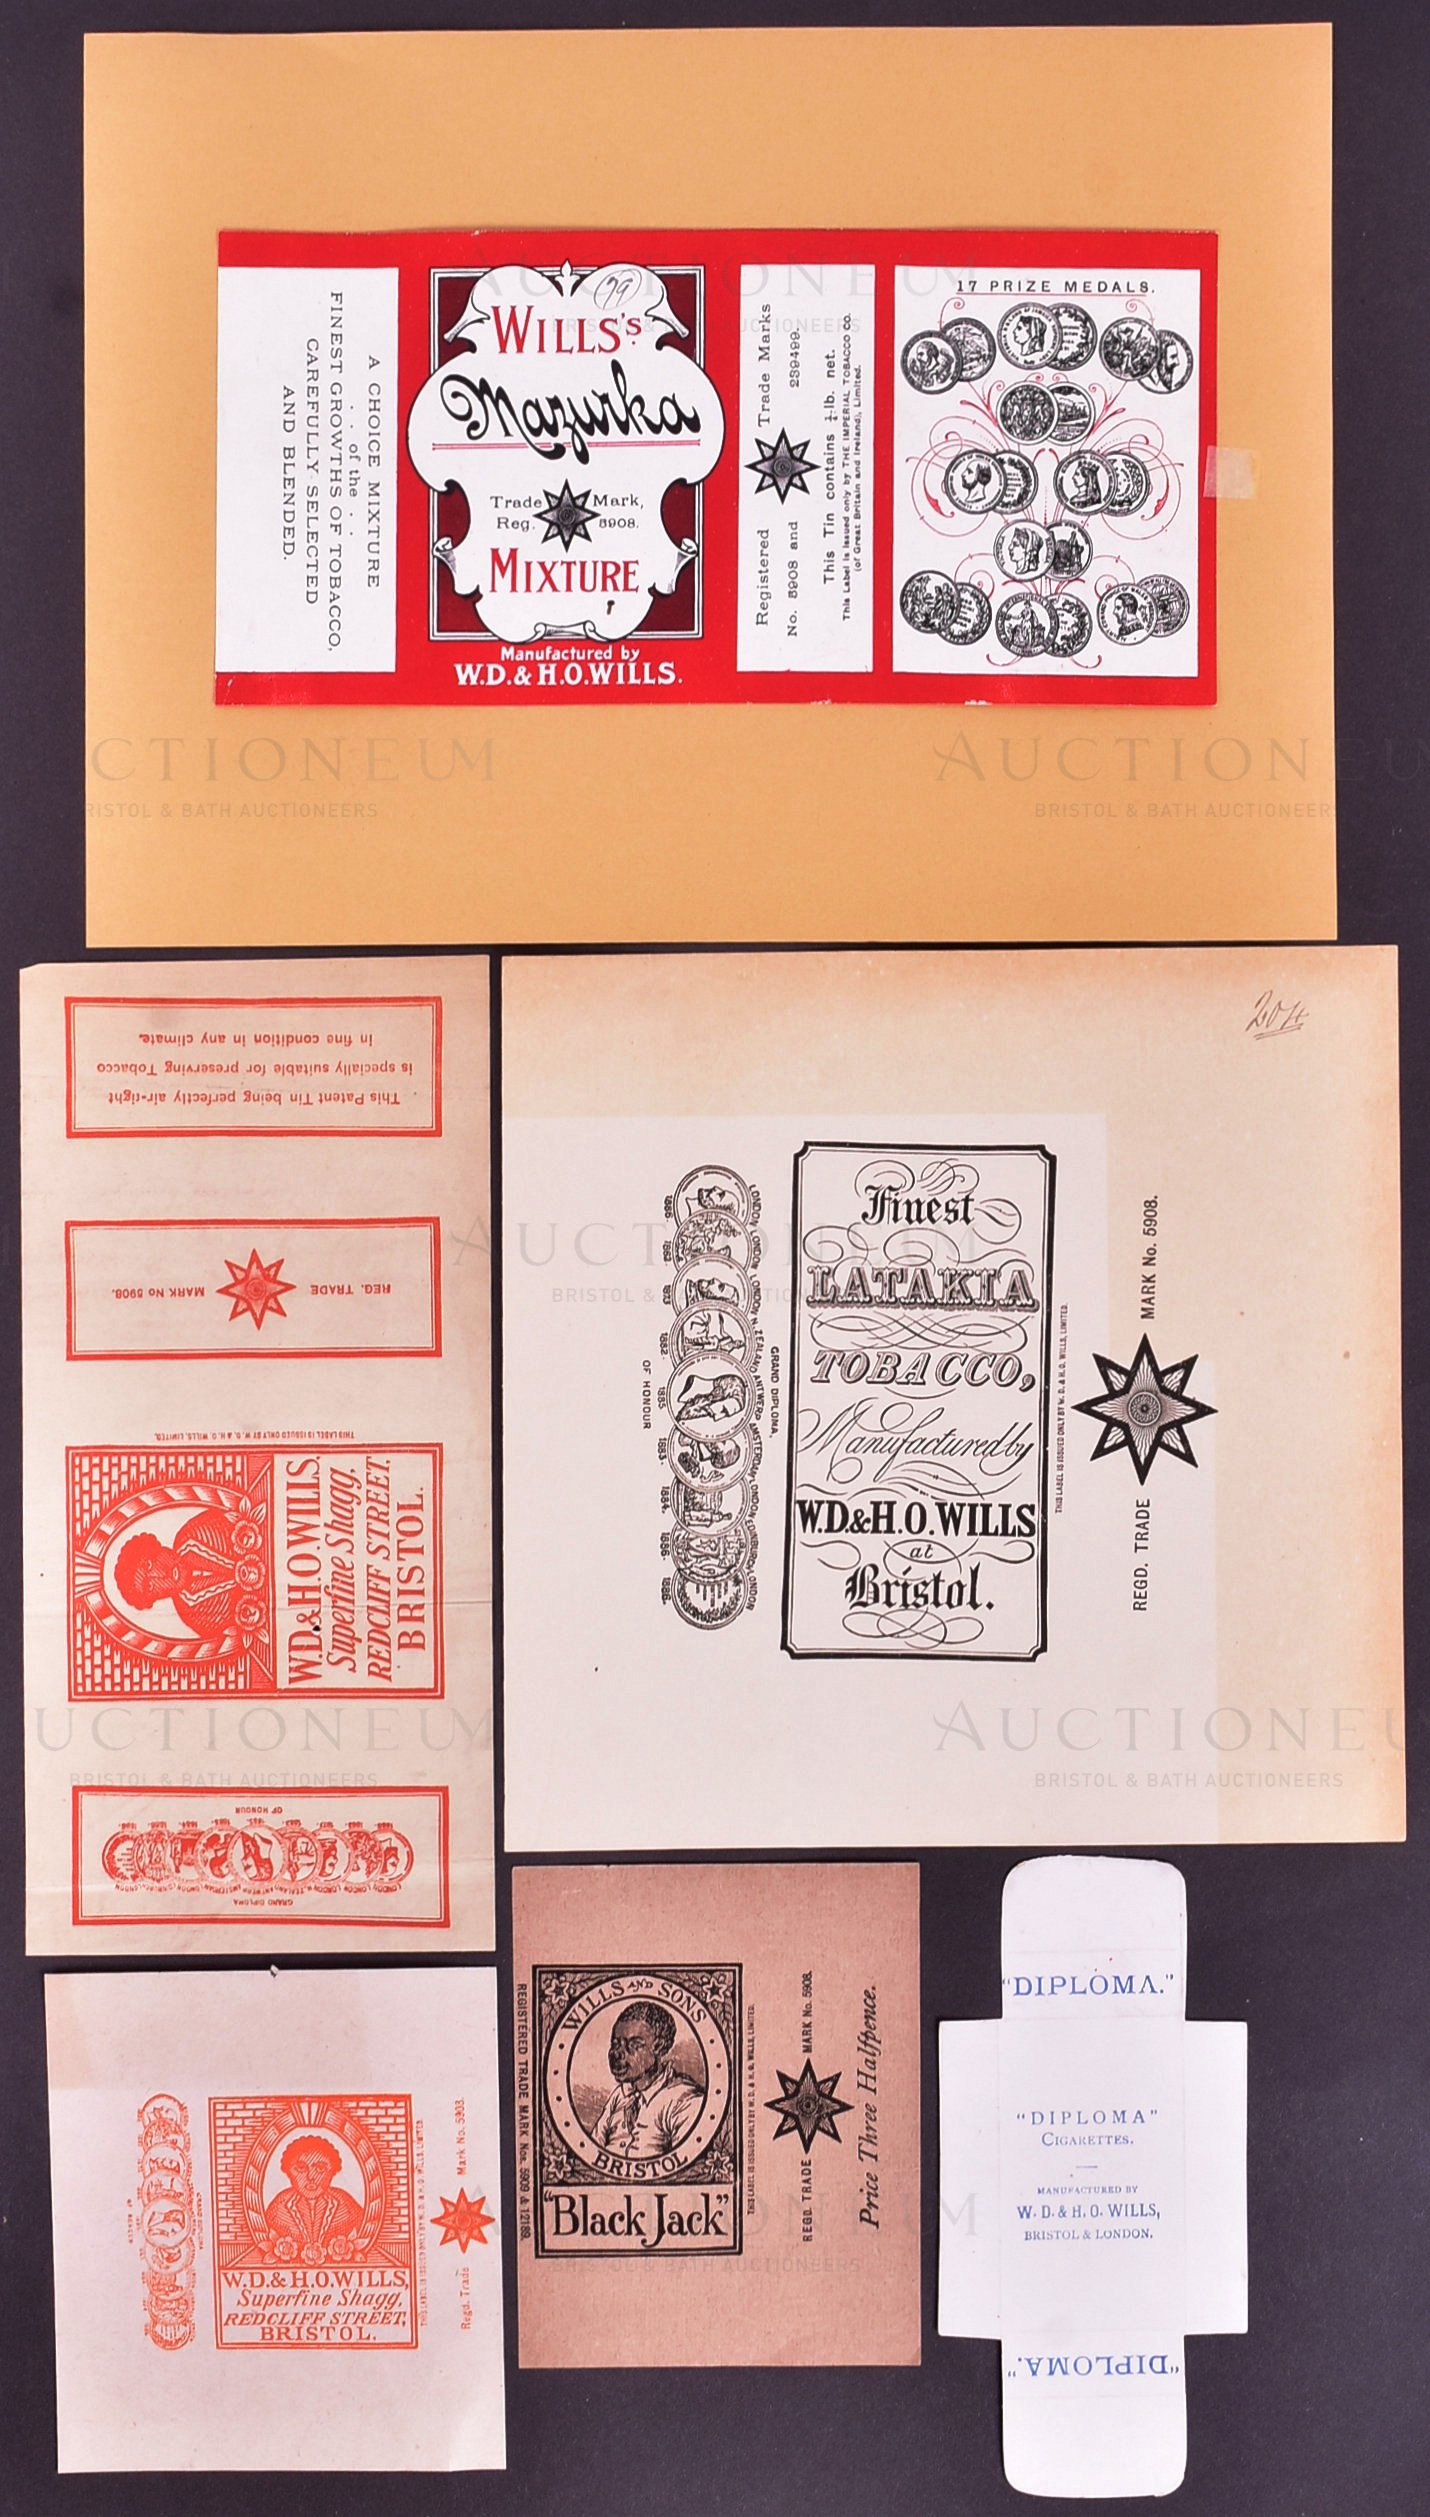 MARDON, SON & HALL - 19TH / 20TH CENTURY TOBACCO PACKET / LABEL DESIGNS